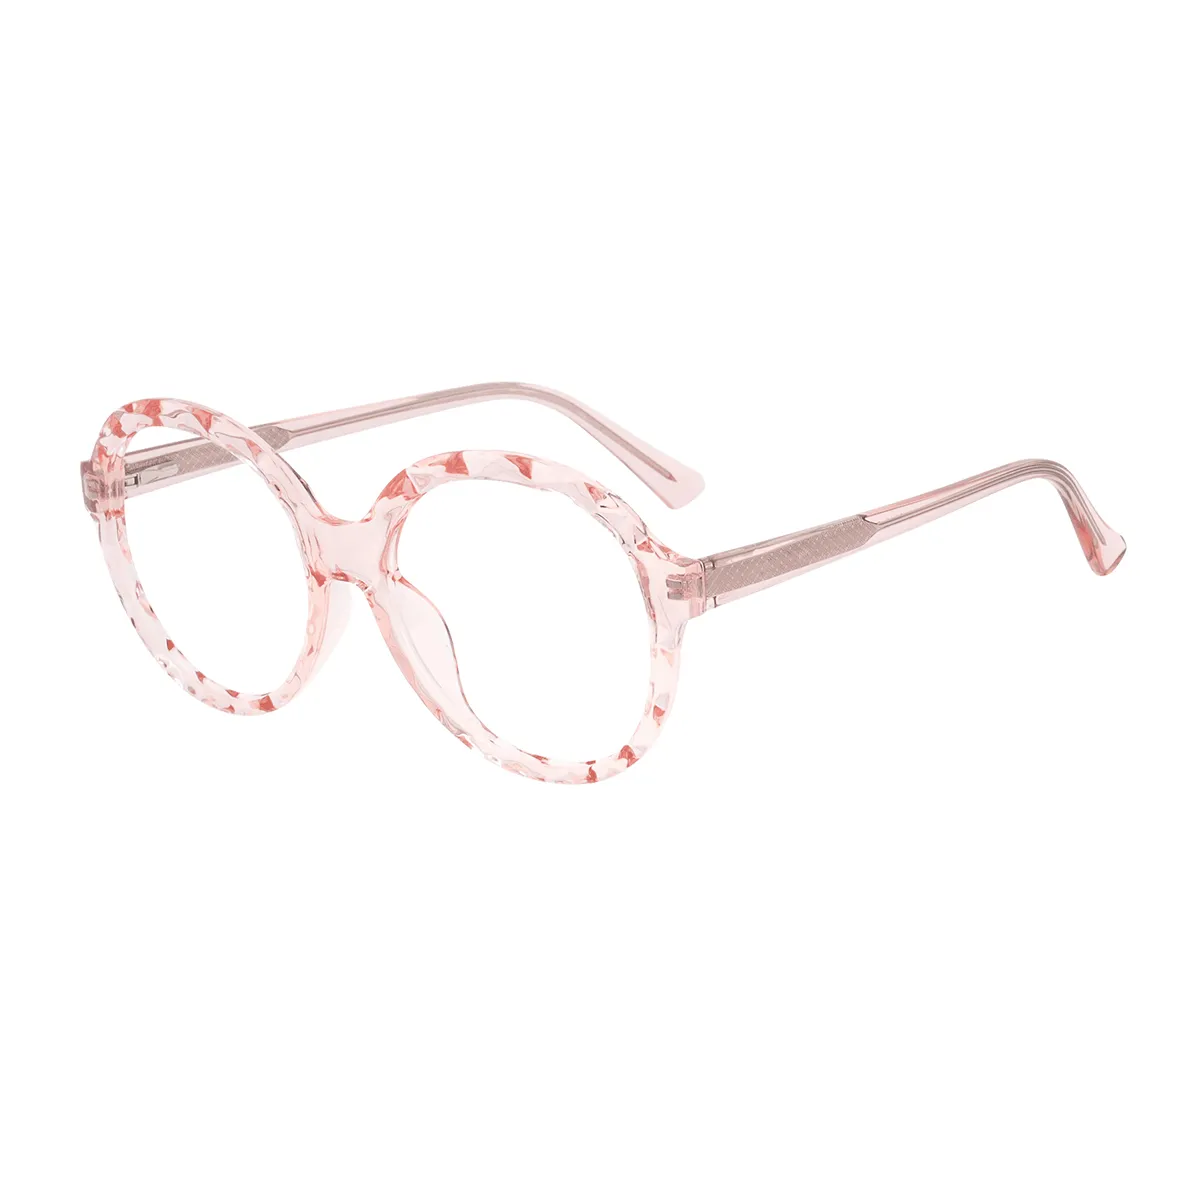 Ezra - Round  Glasses for Women